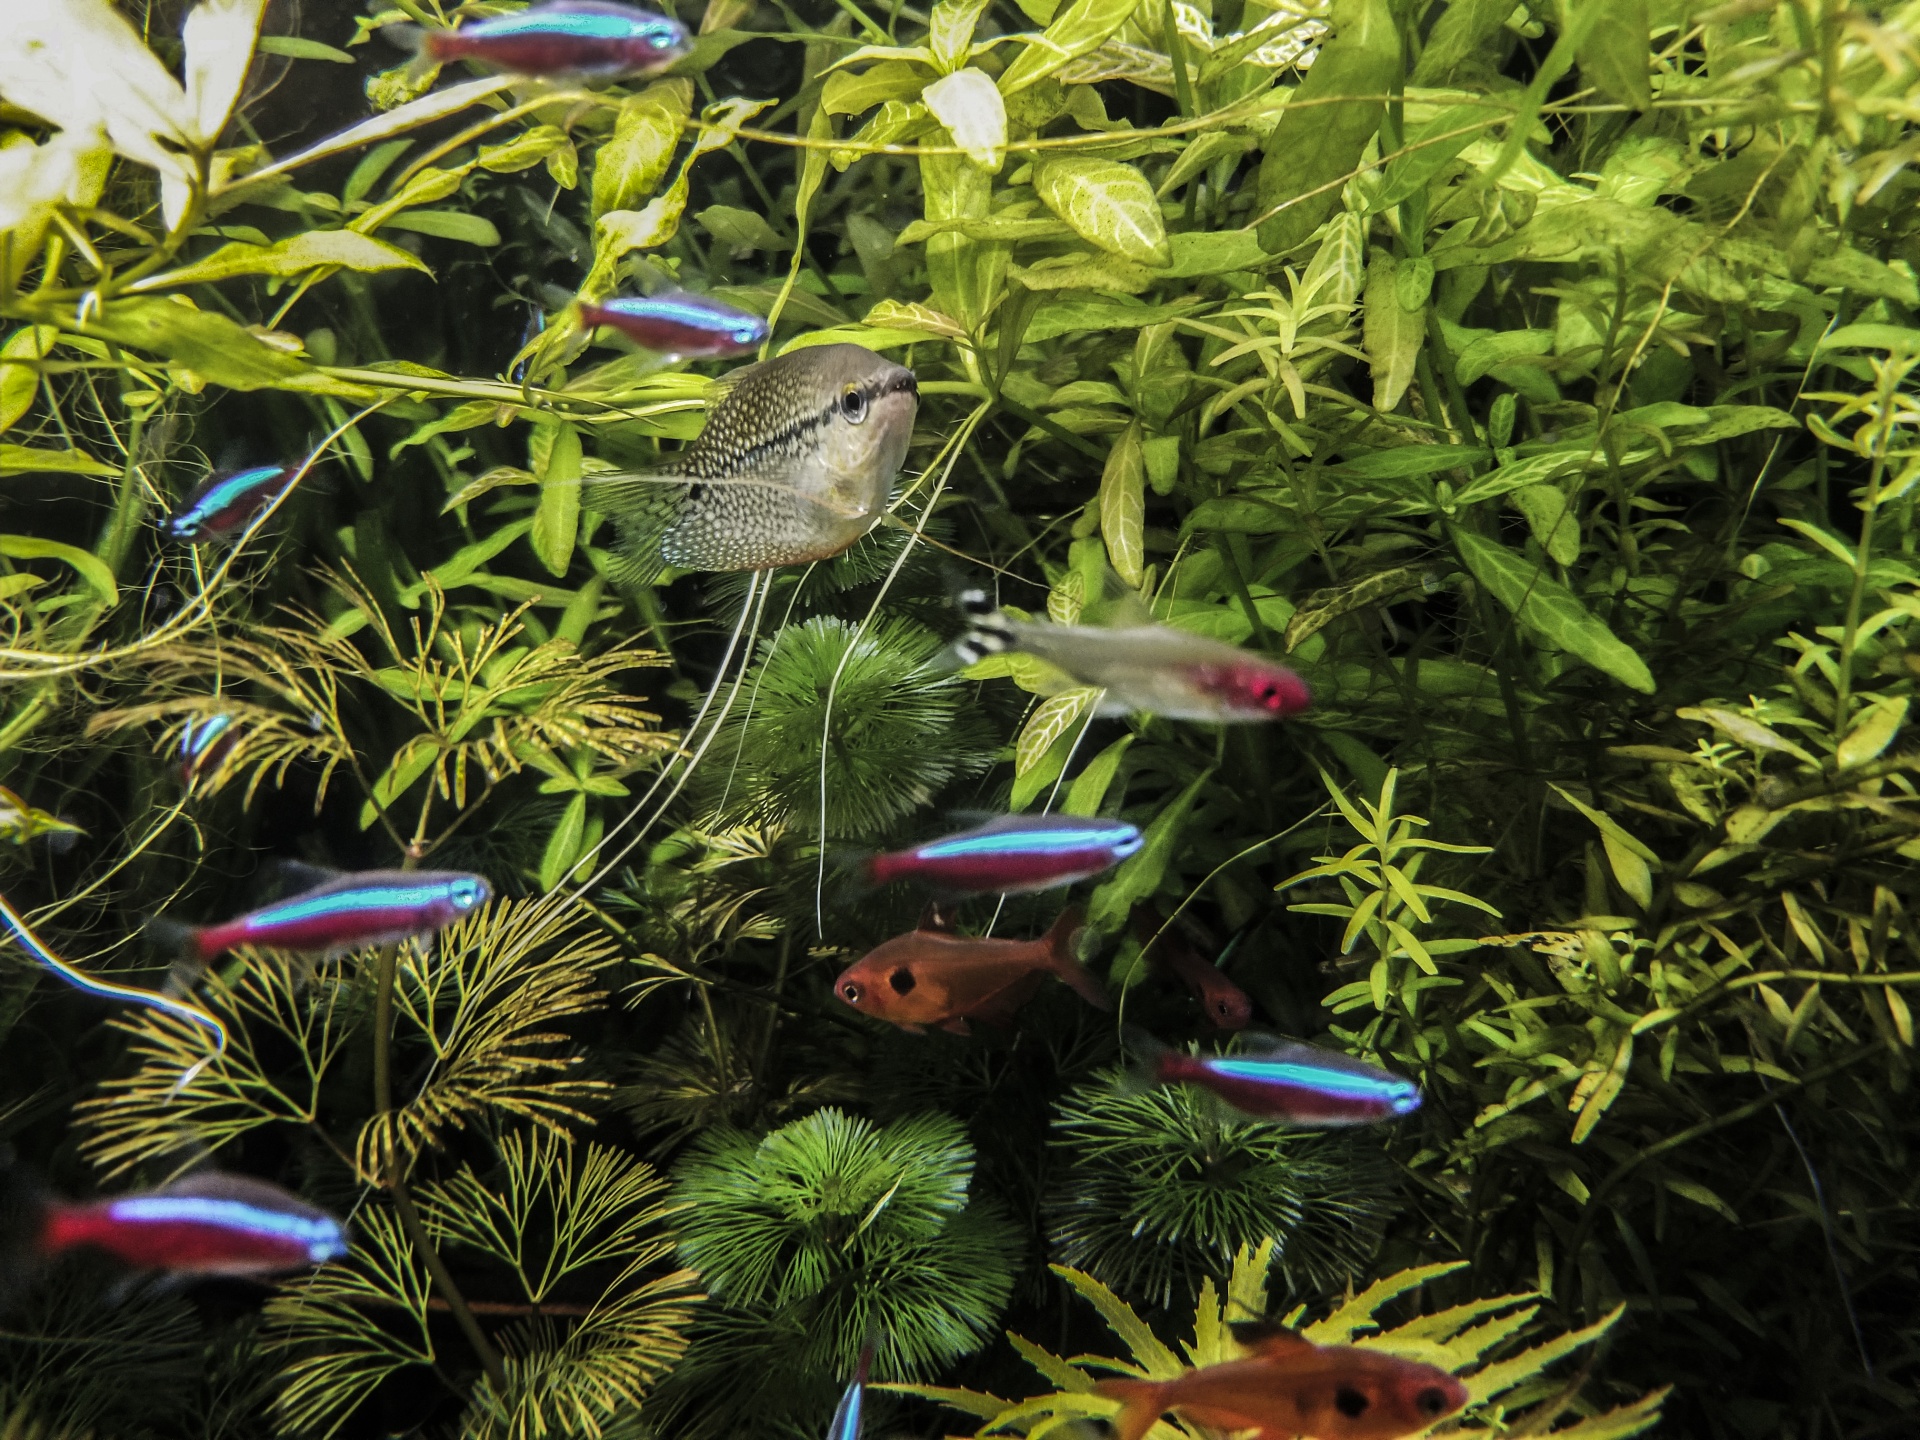 Community Fish Tank How to choose compatible fish for your community aquarium